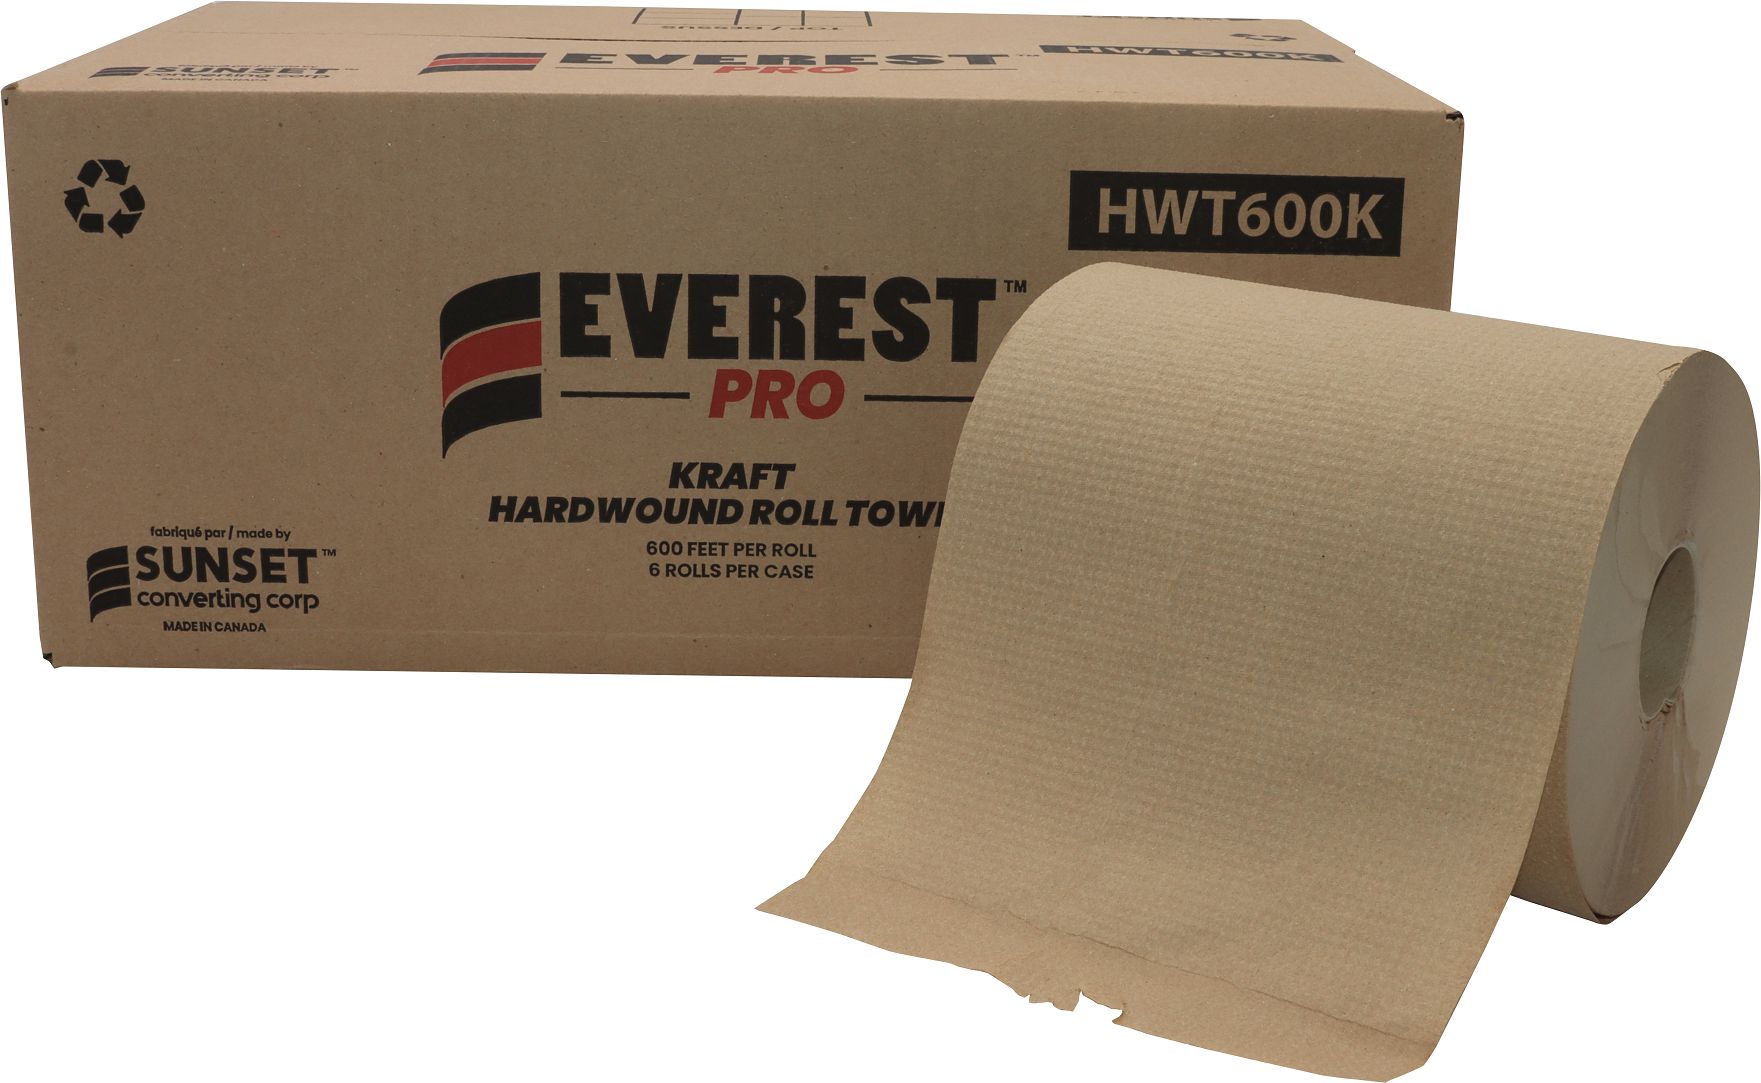 Everest Pro - 600 Feet Kraft Roll Towel, 6 Rl/Cs - HWT600K